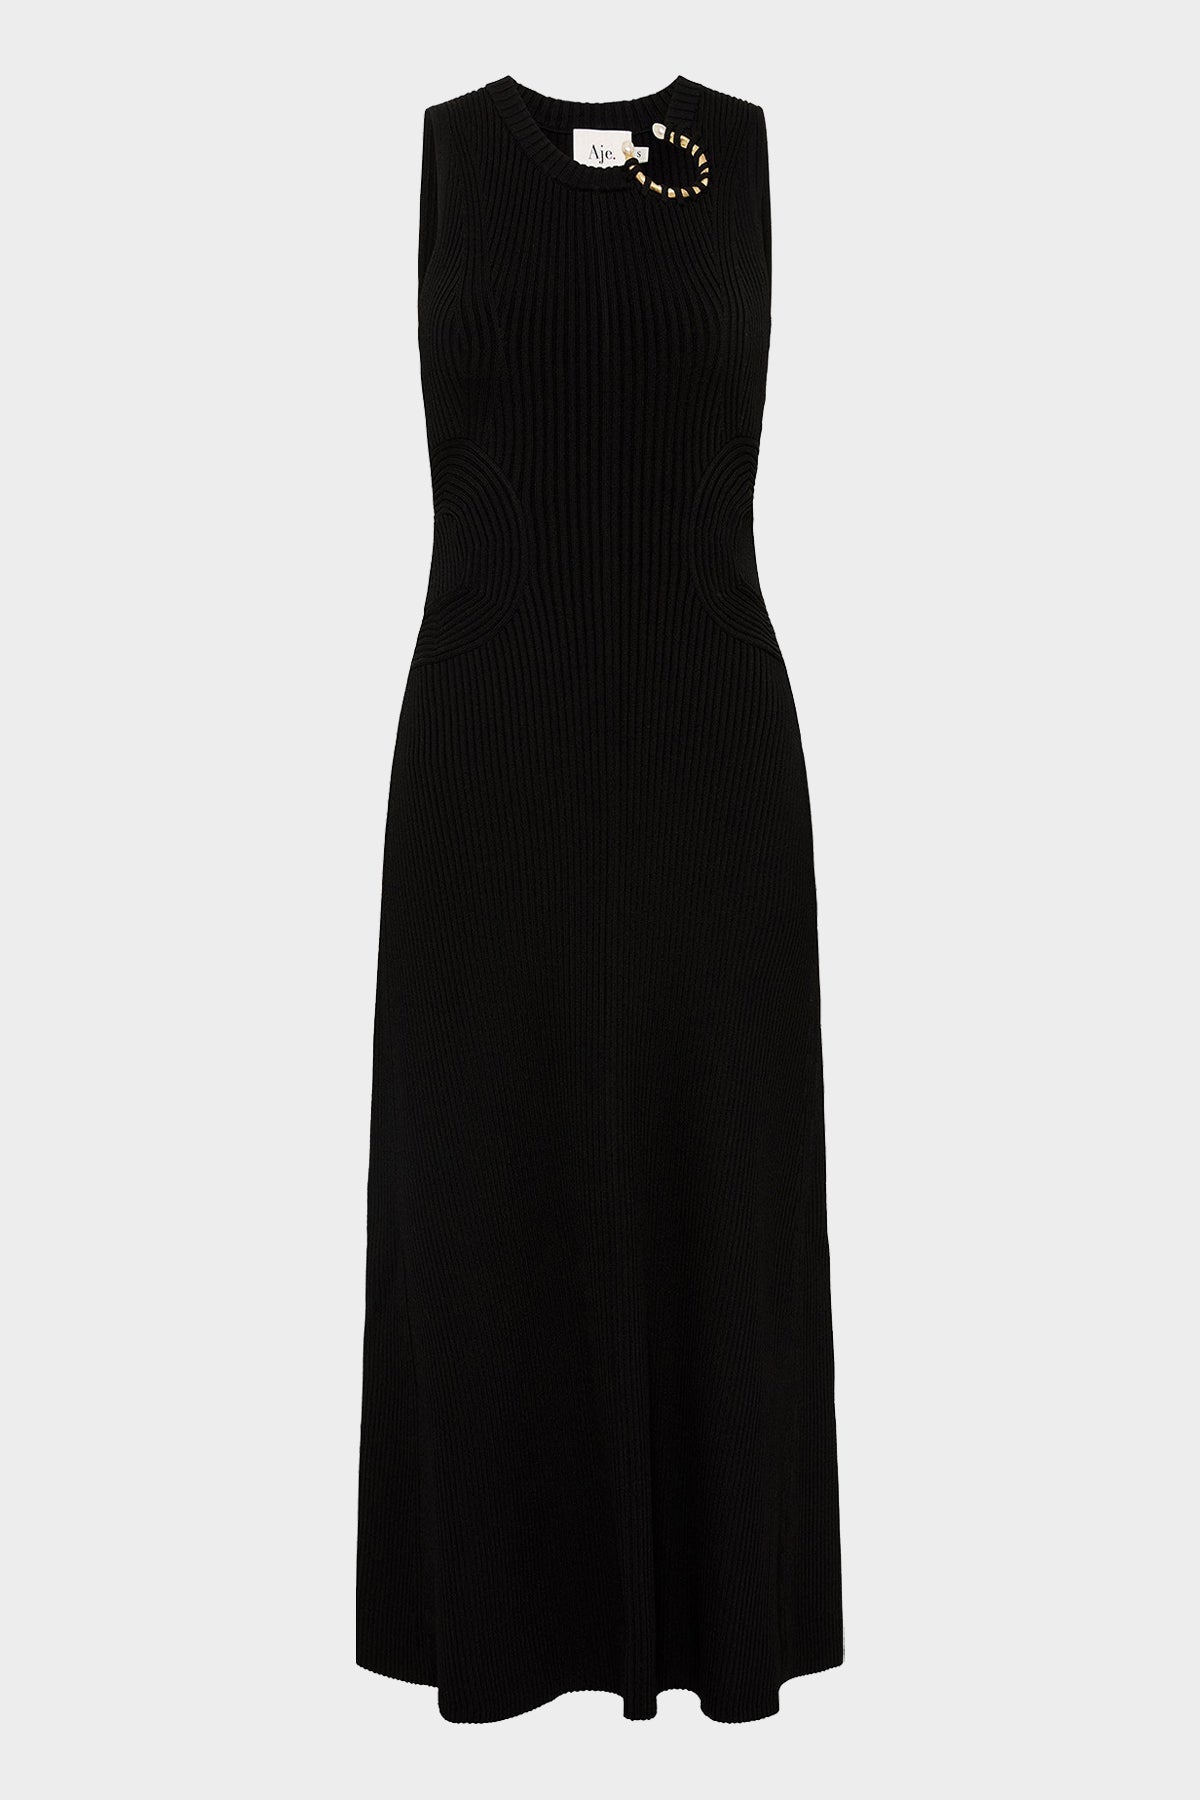 Crescent Knit Midi Dress in Black - shop-olivia.com